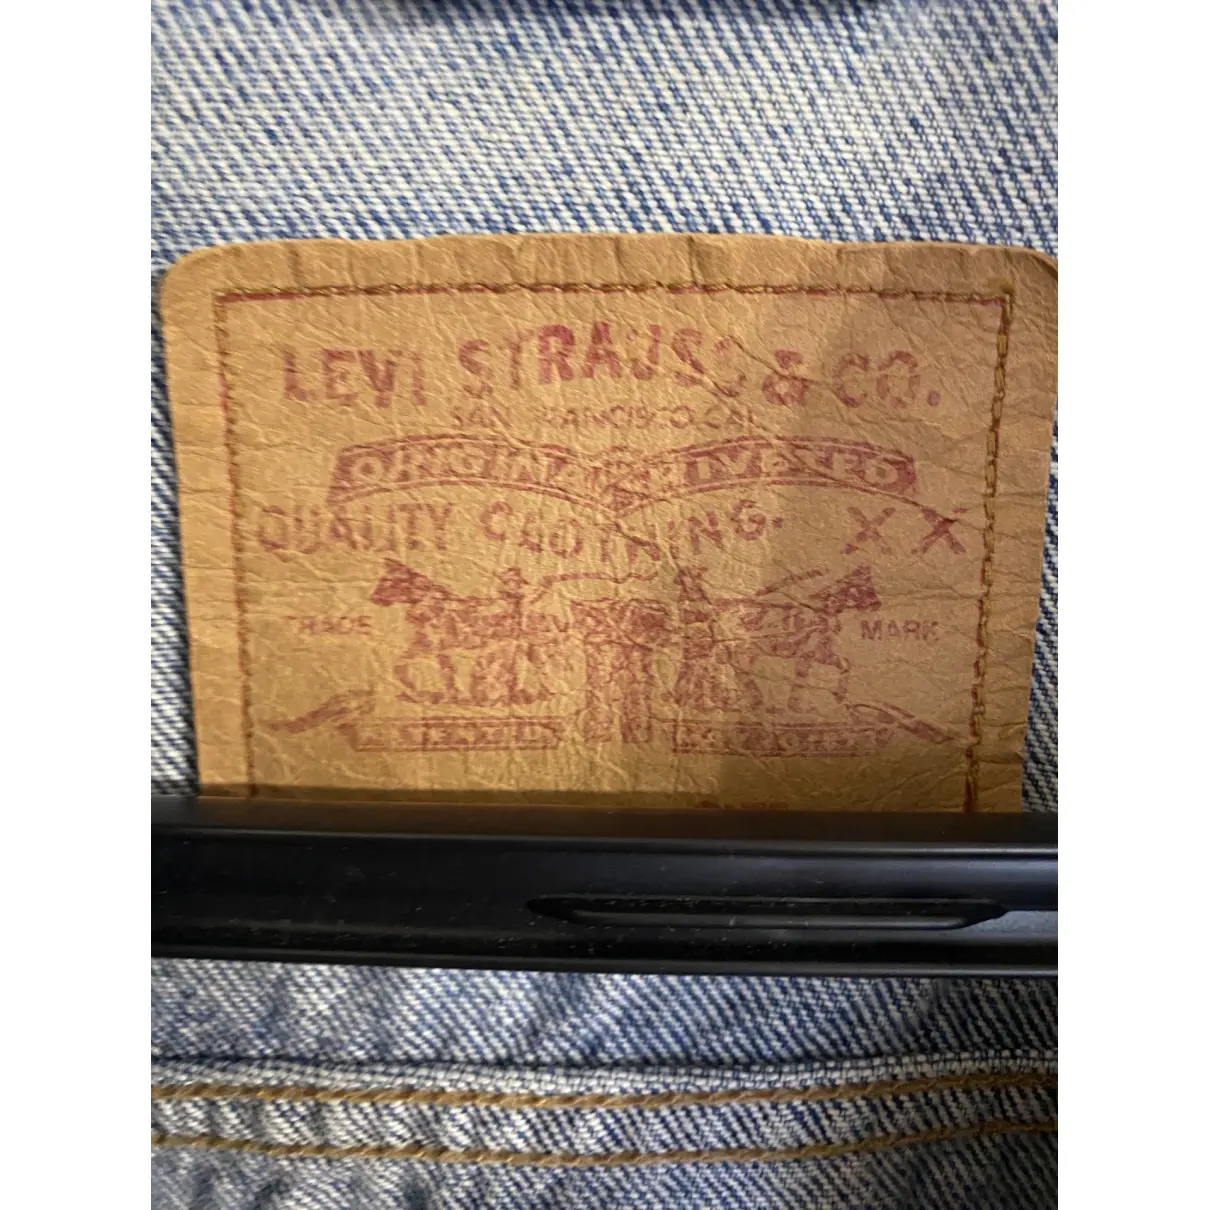 Buy Levi's Vintage Clothing Vest online